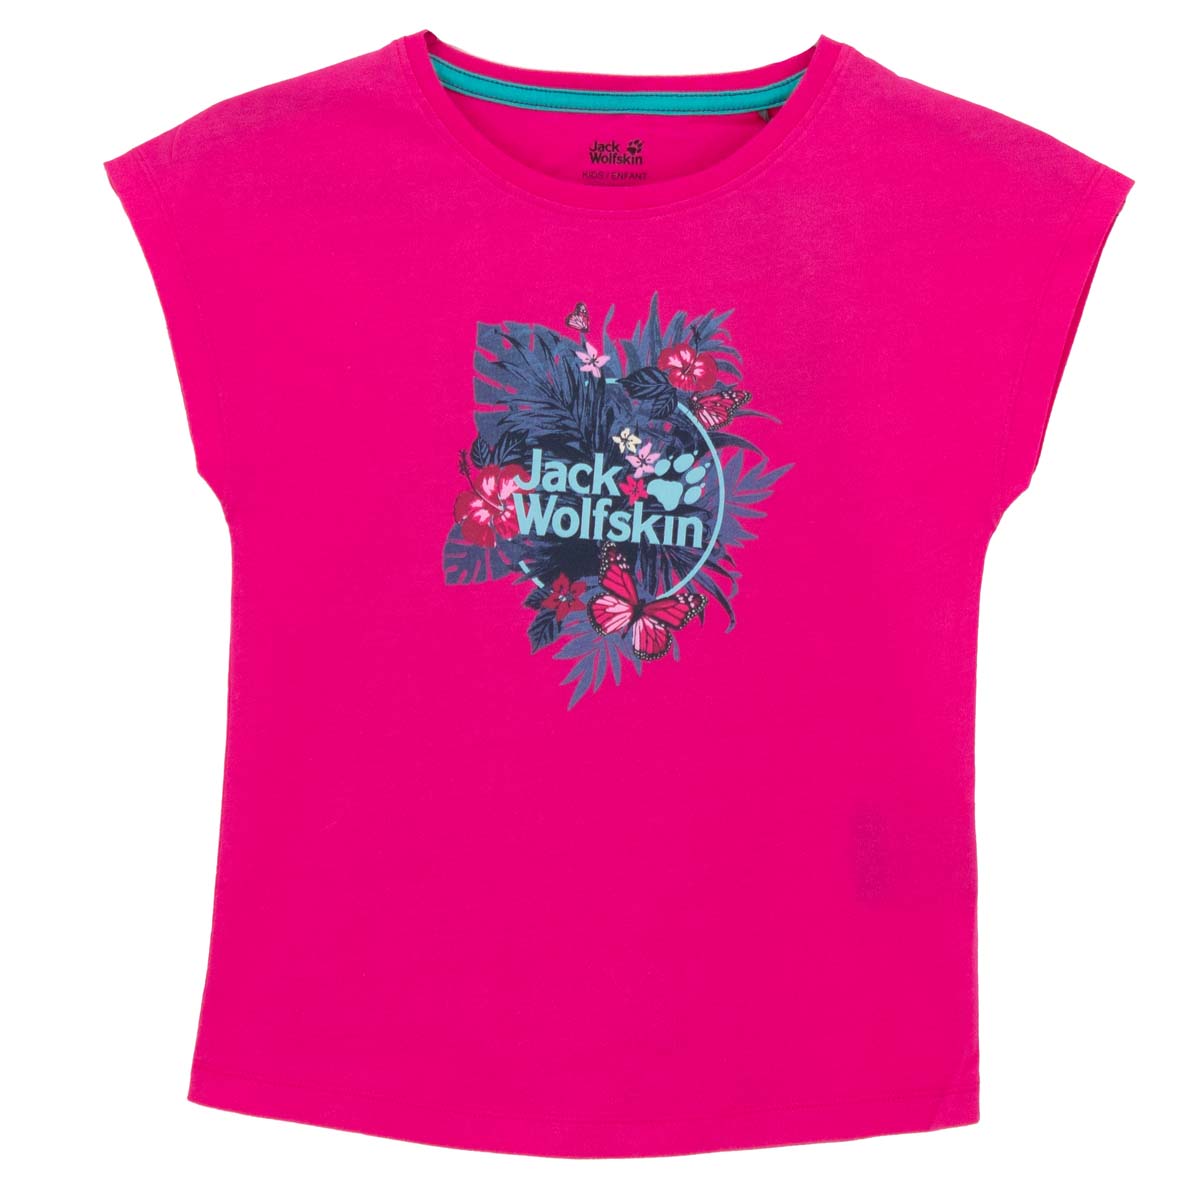 Jack Wolfskin Tropical kurzarm T-Shirt Kinder Baumwolle Pink 1607851-2010 128